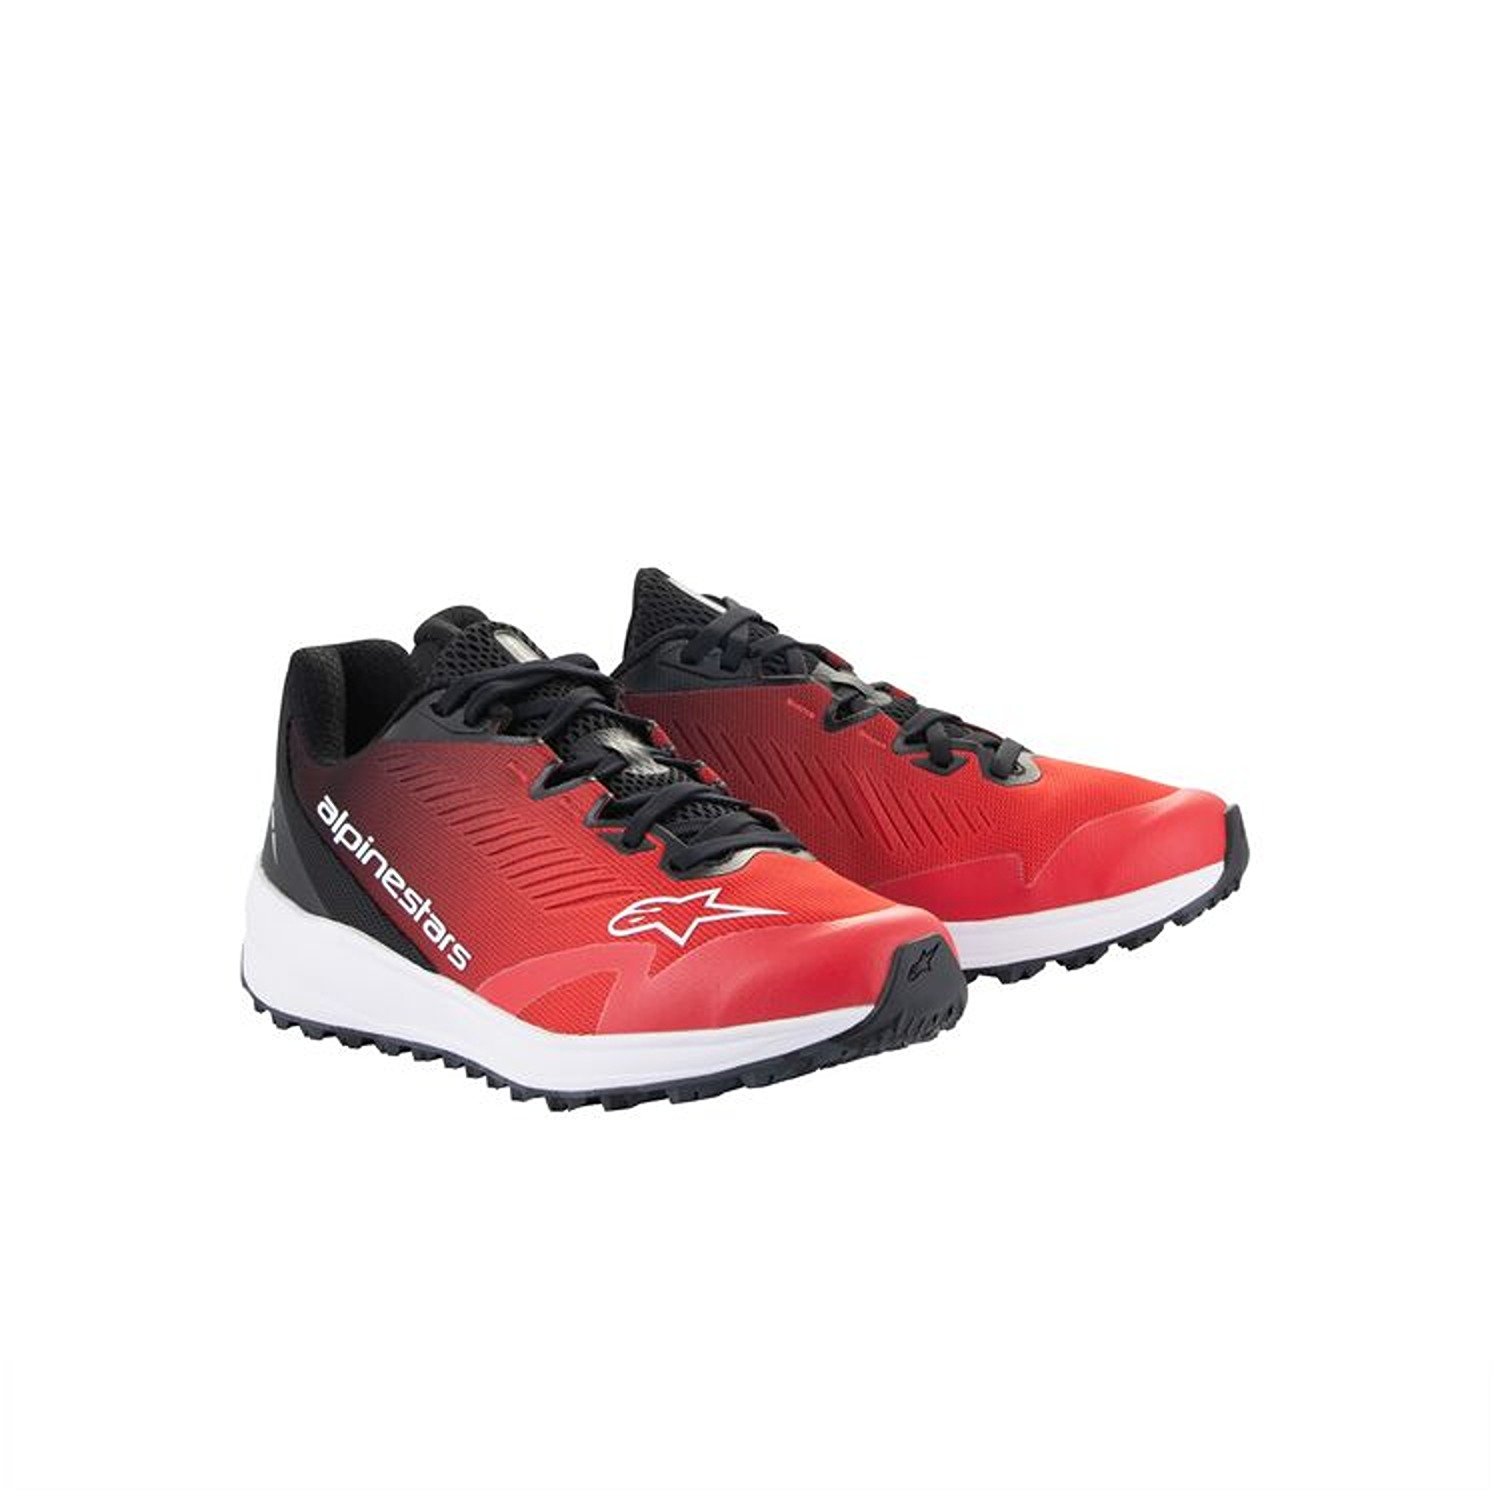 Image of Alpinestars Meta Road V2 Shoes Red Black White Size US 125 EN